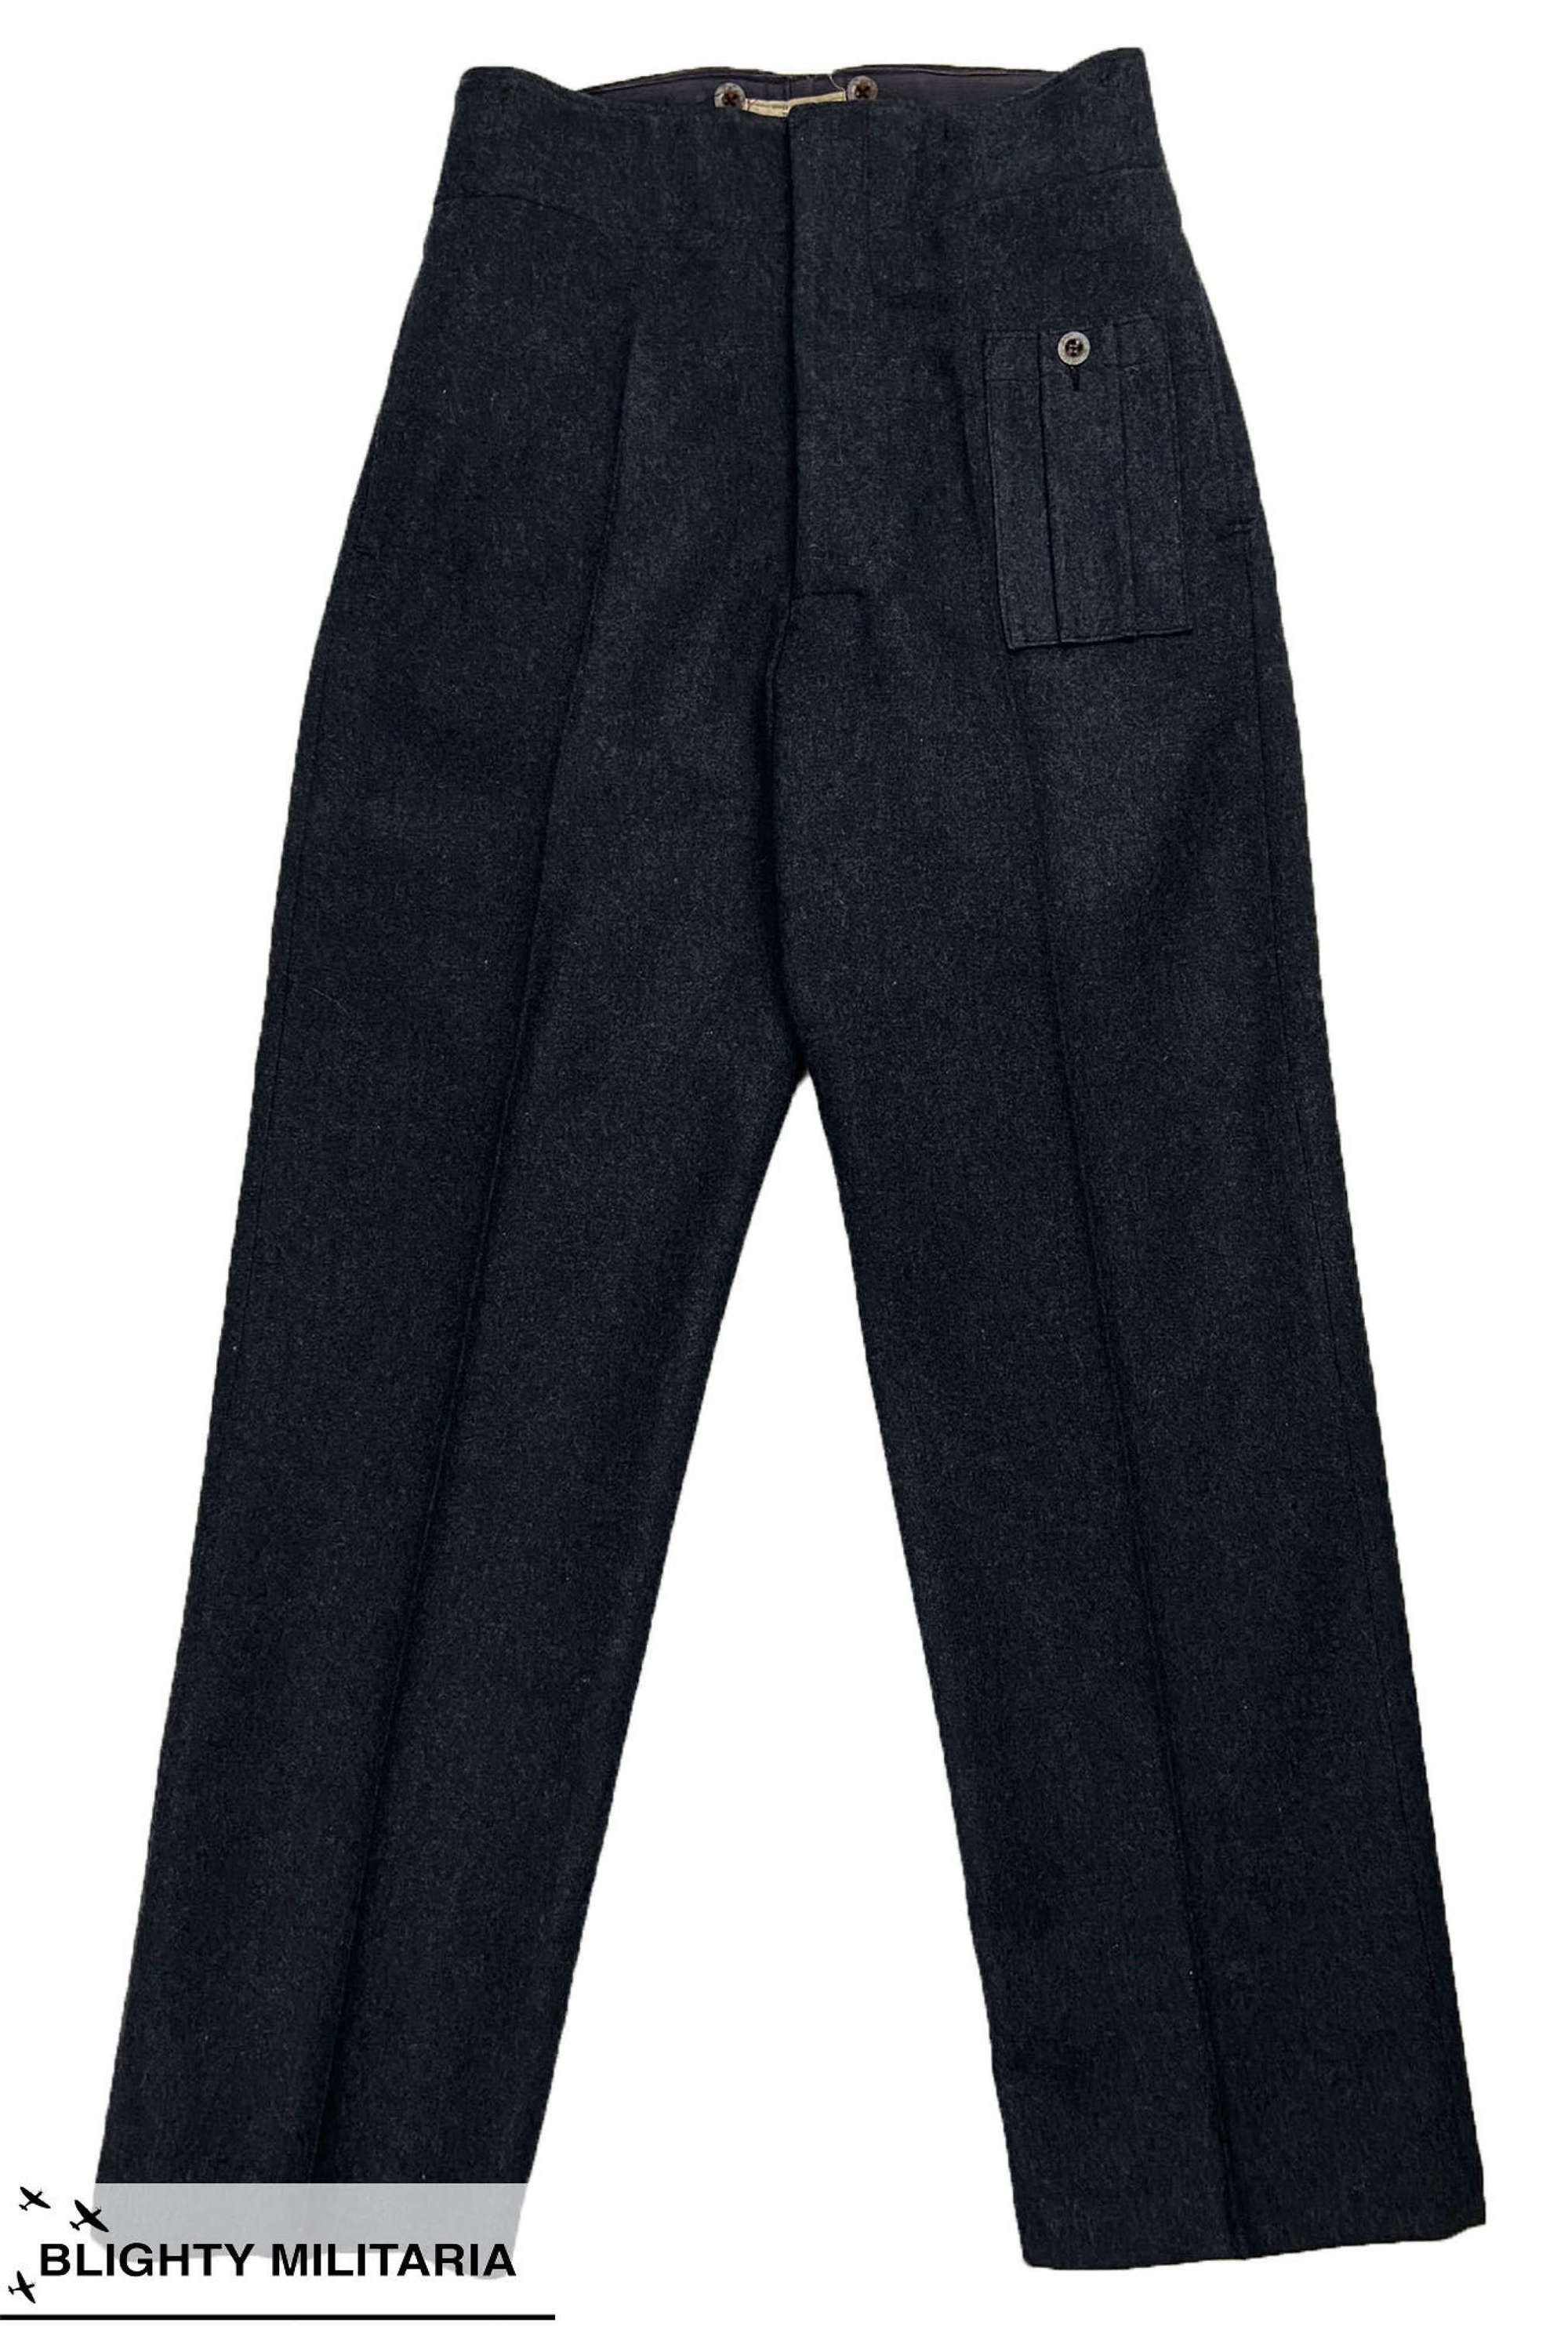 Original 1943 Dated RAF War Service Dress Trousers - Size 10